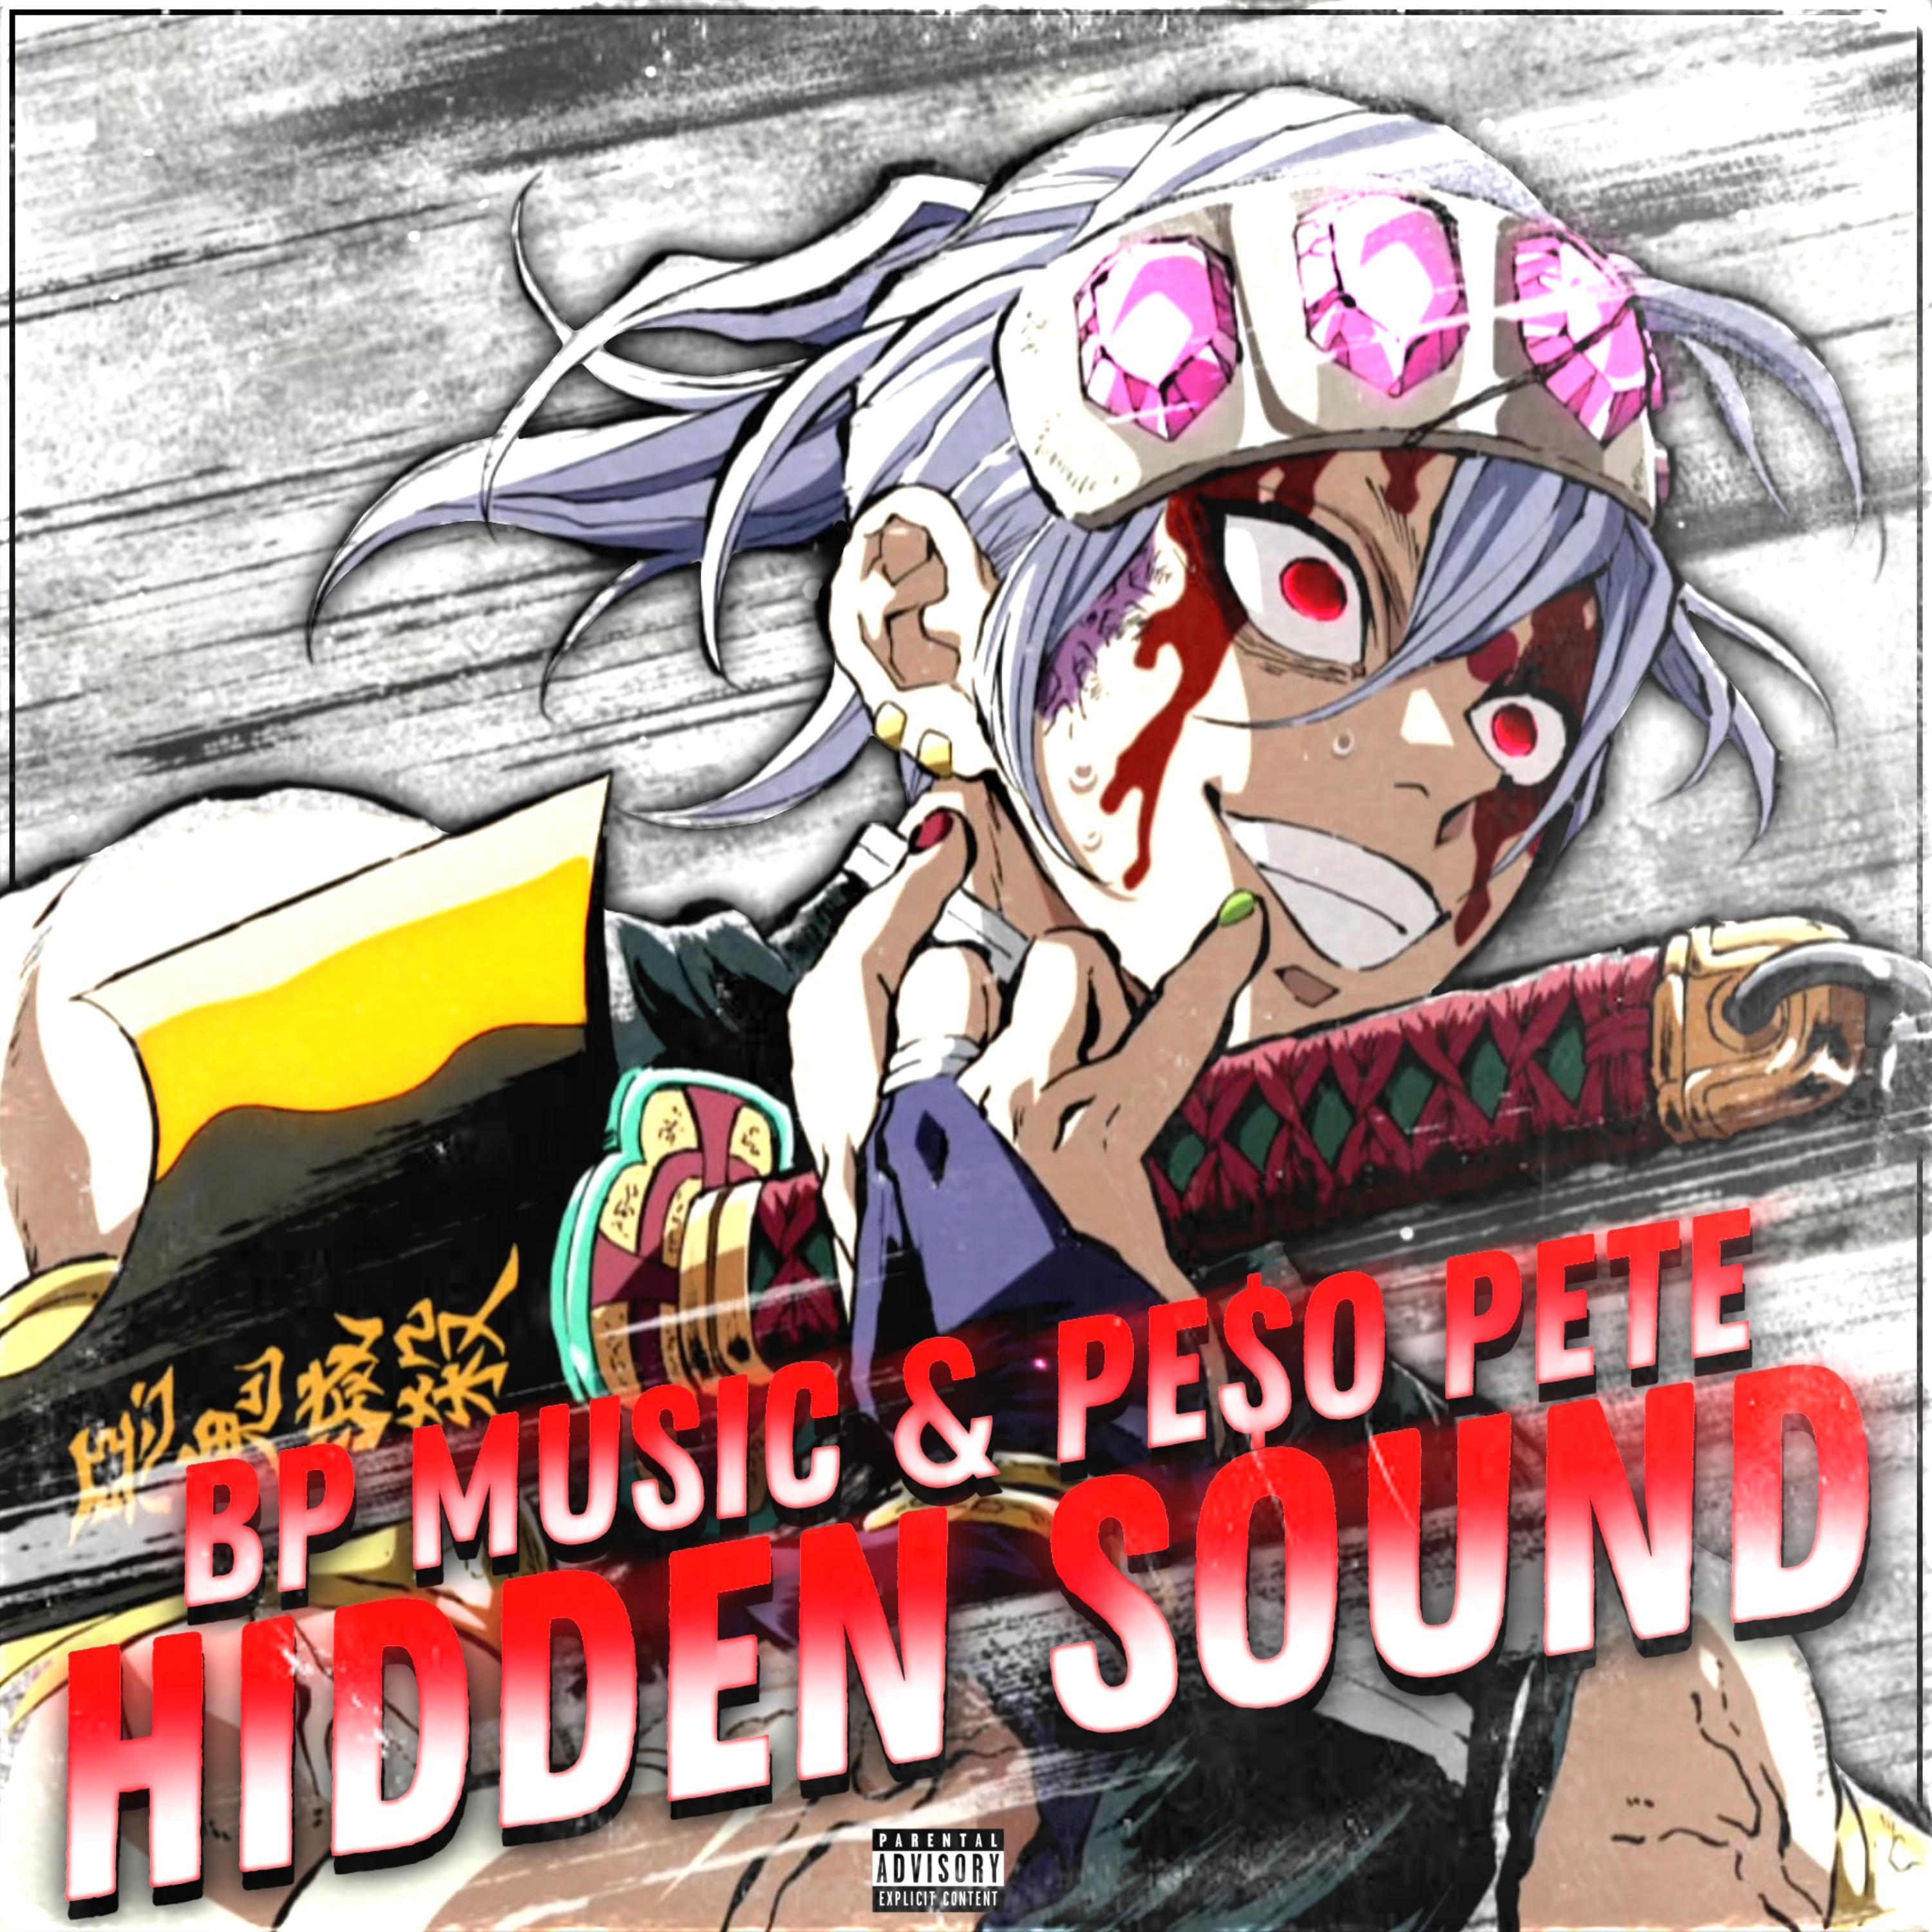 BP Musiq - Hidden Sound (feat. PE$O PETE)